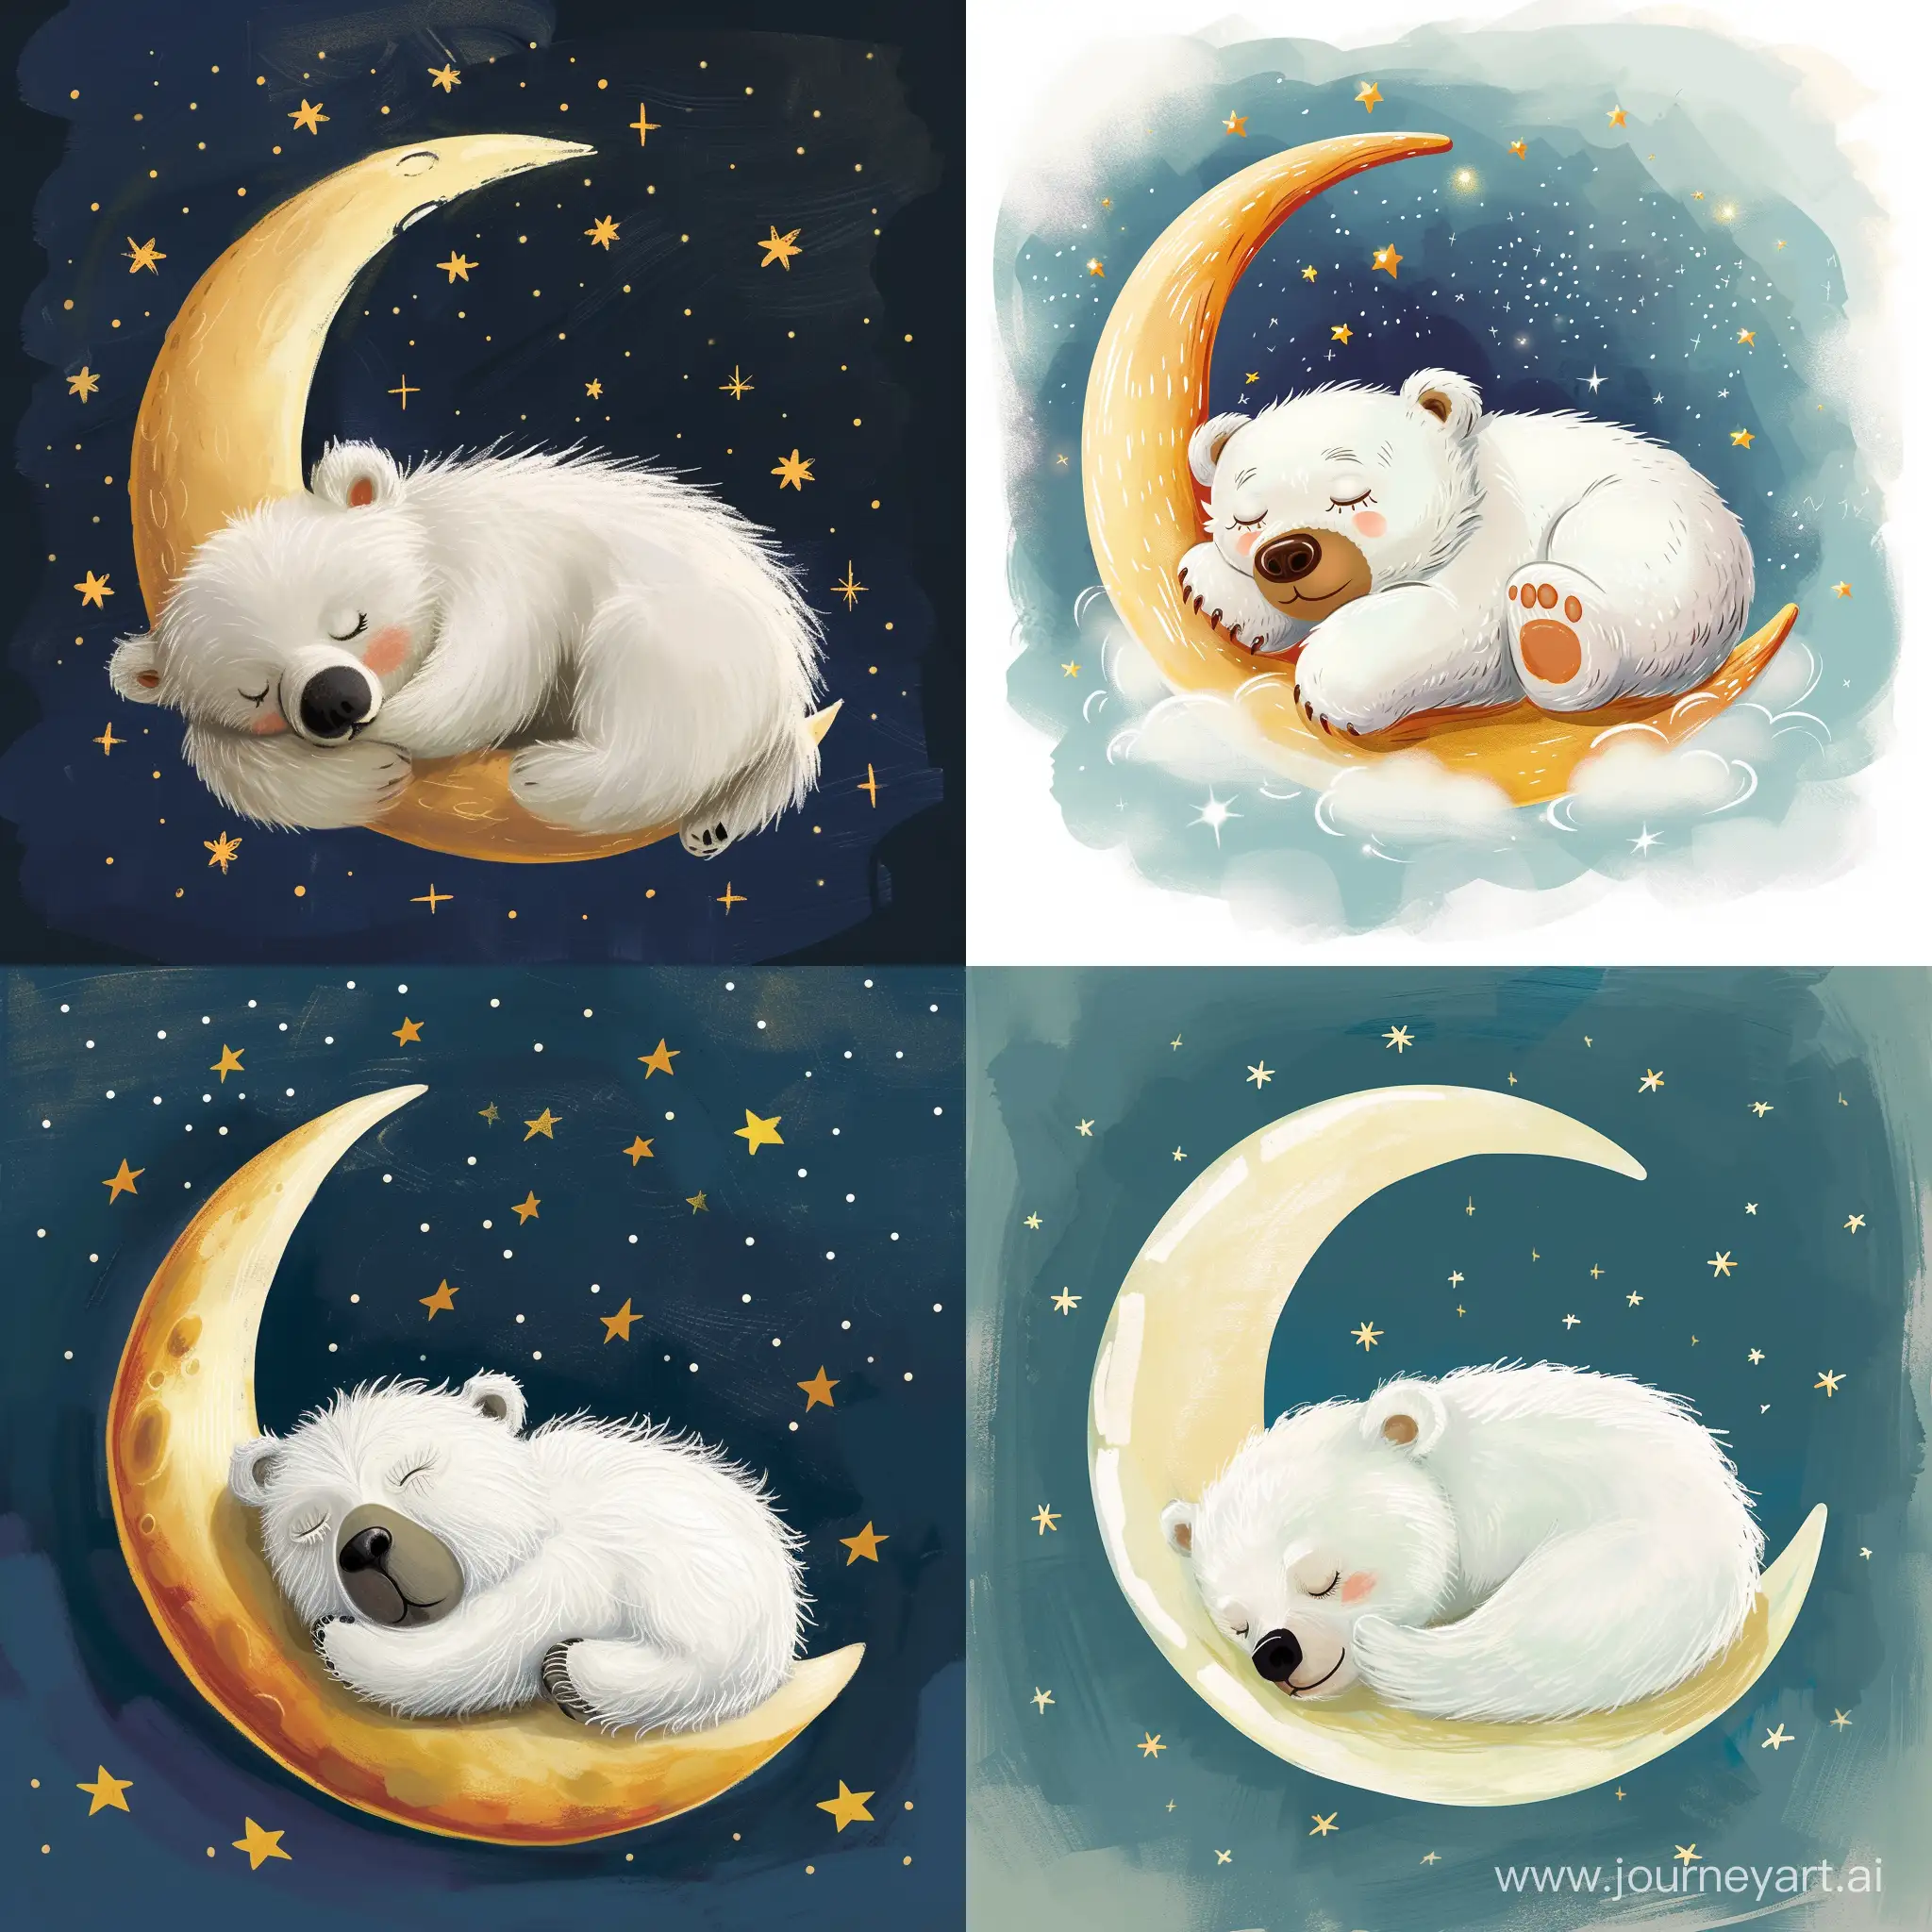 Dreamy-White-Bear-Sleeping-on-Crescent-Moon-Enchanting-Childrens-Illustration